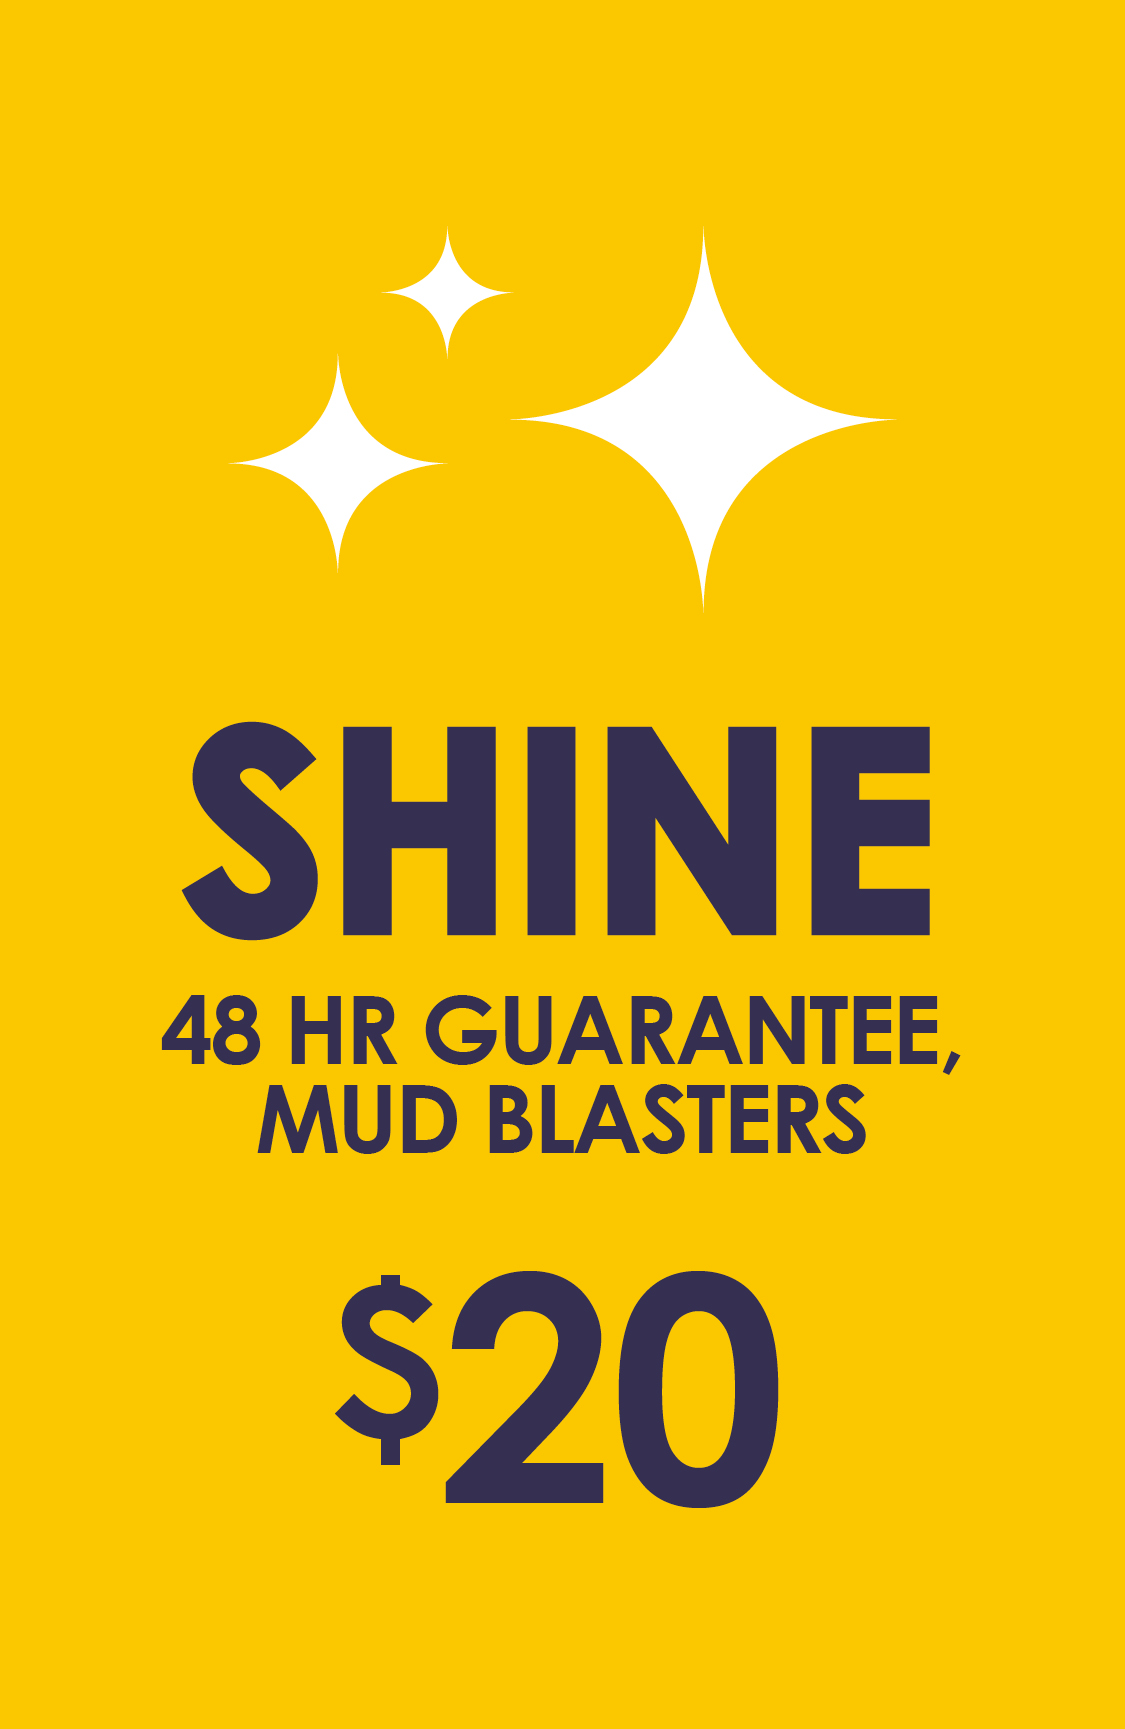 Shine, 48 Hr Guarantee, Mud Blasters, $20